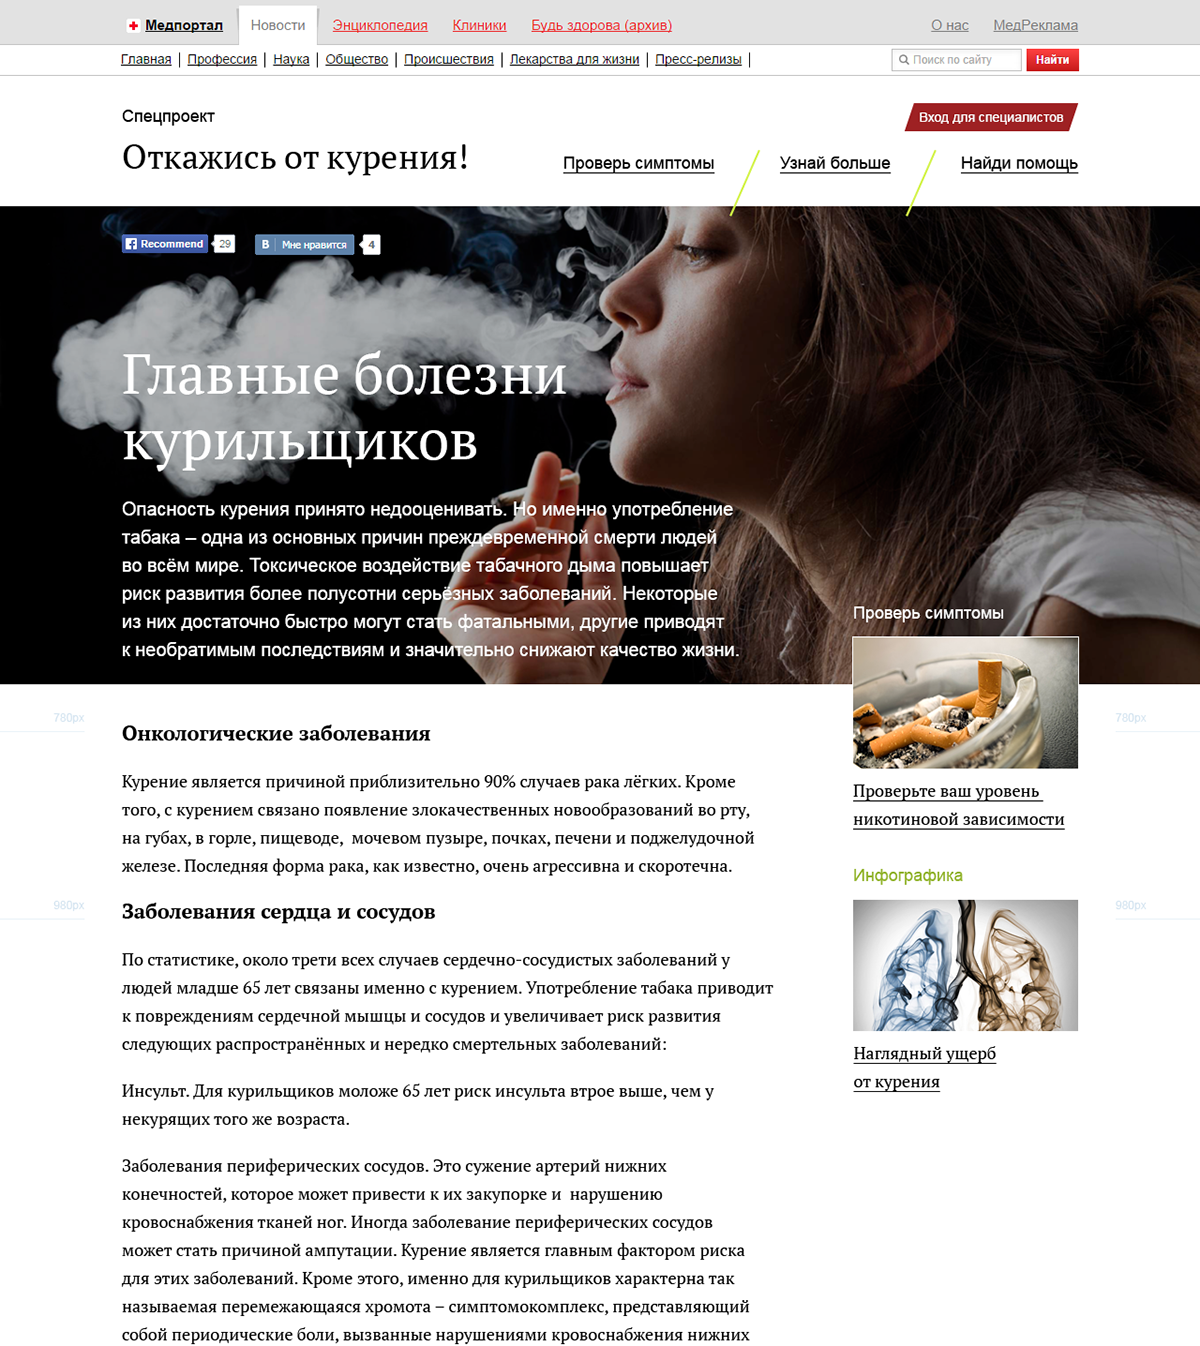 Website medicine smoking